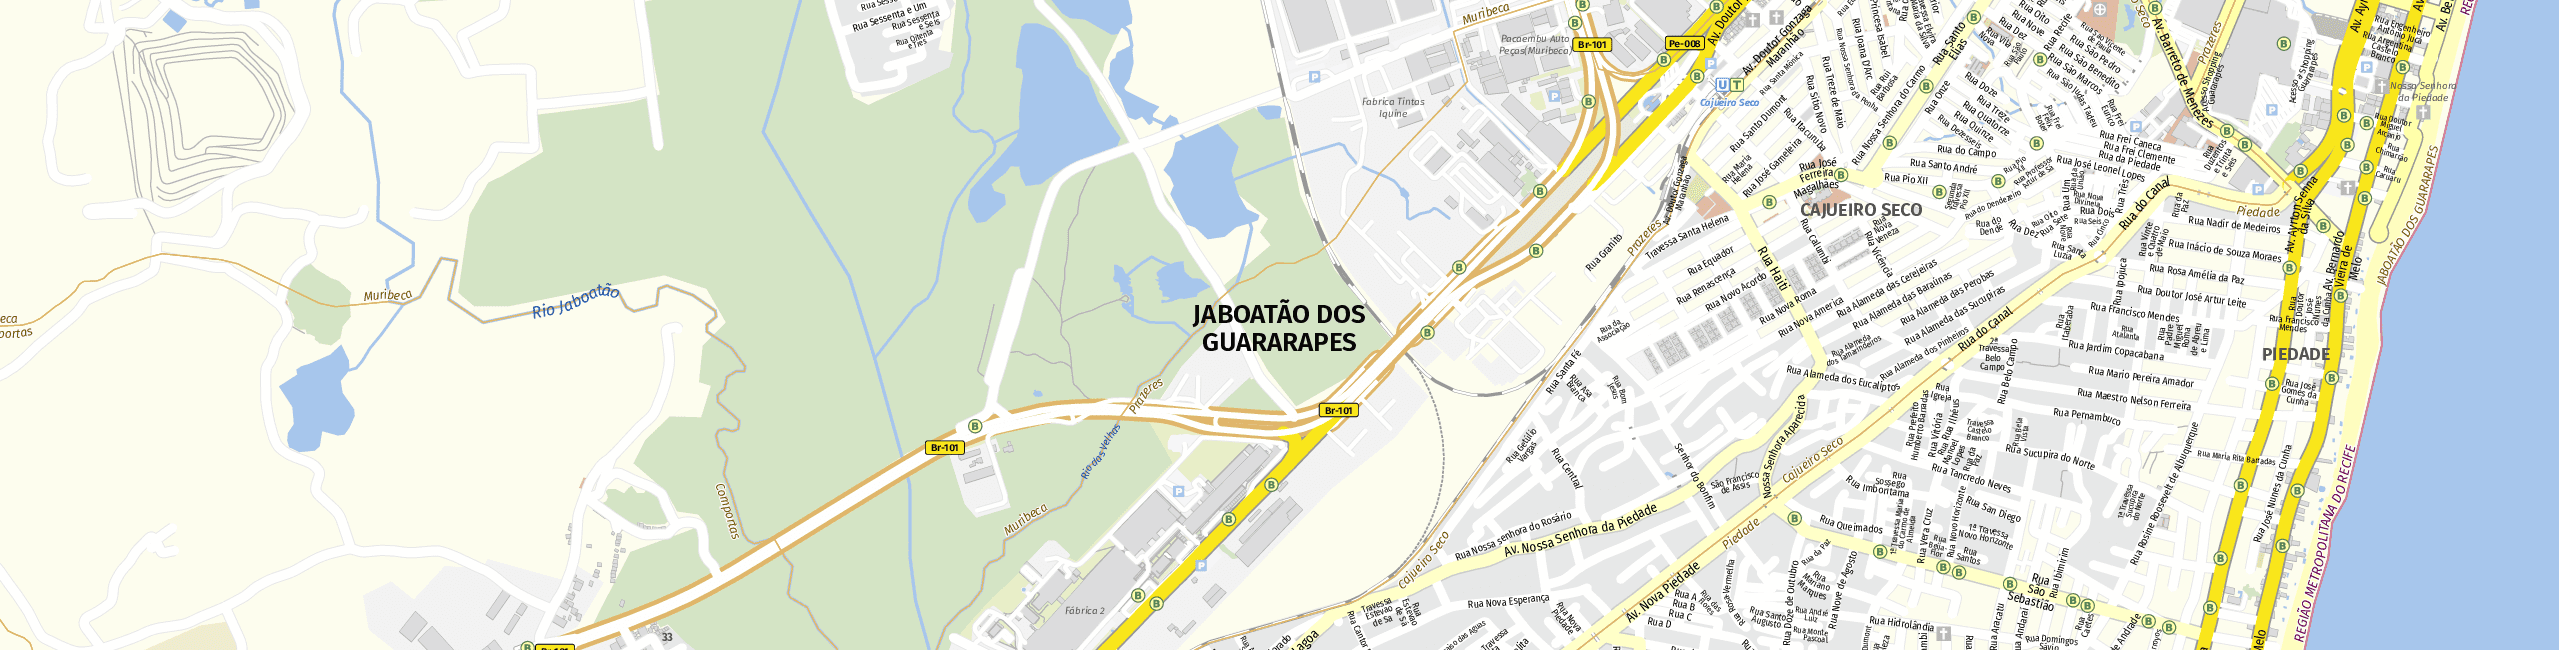 Stadtplan Jaboatão dos Guararapes zum Downloaden.